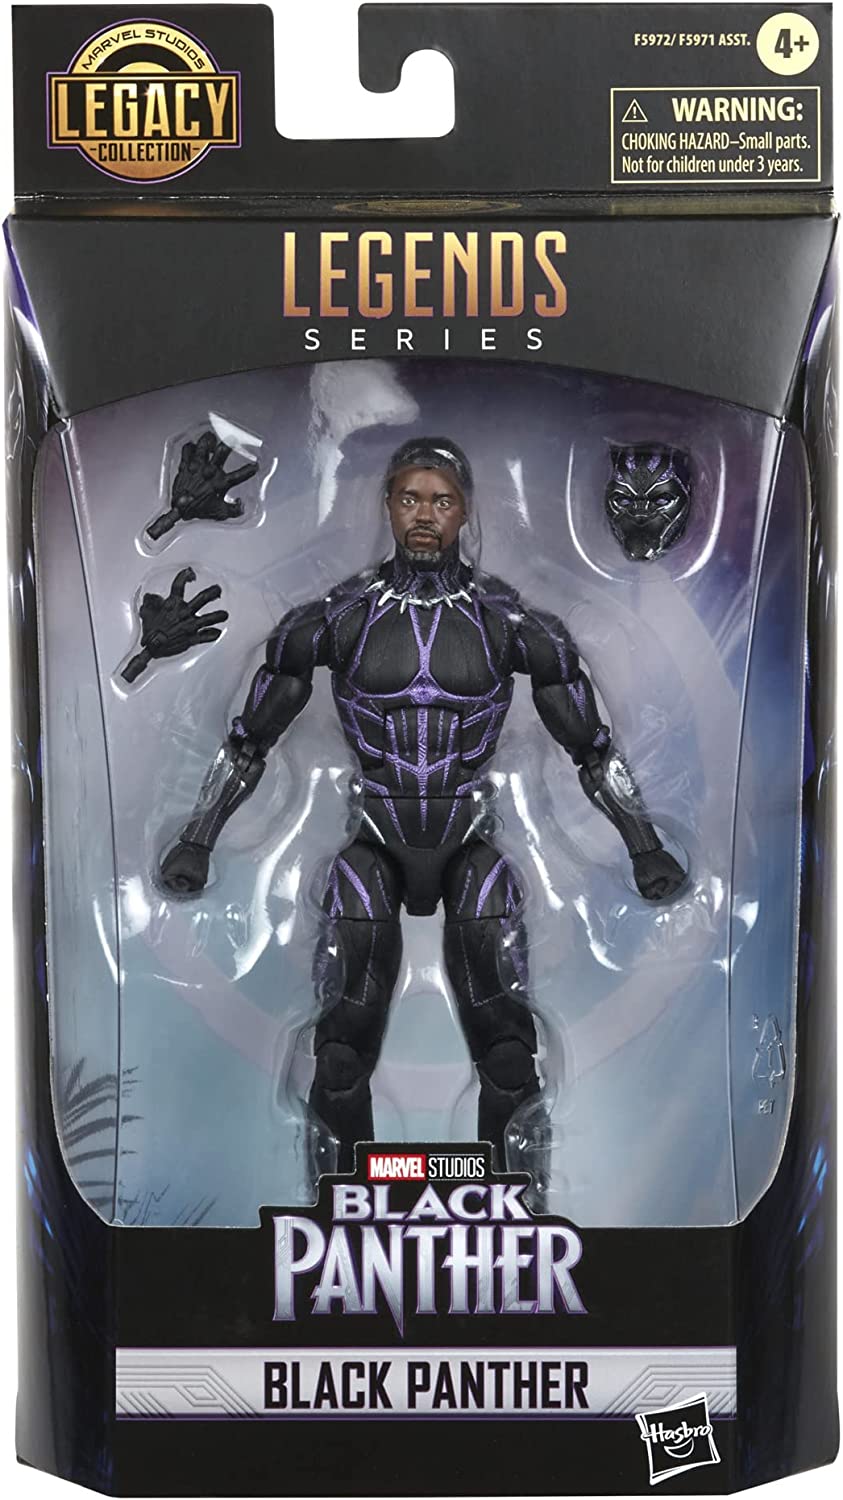 Black Panther Legacy Figure